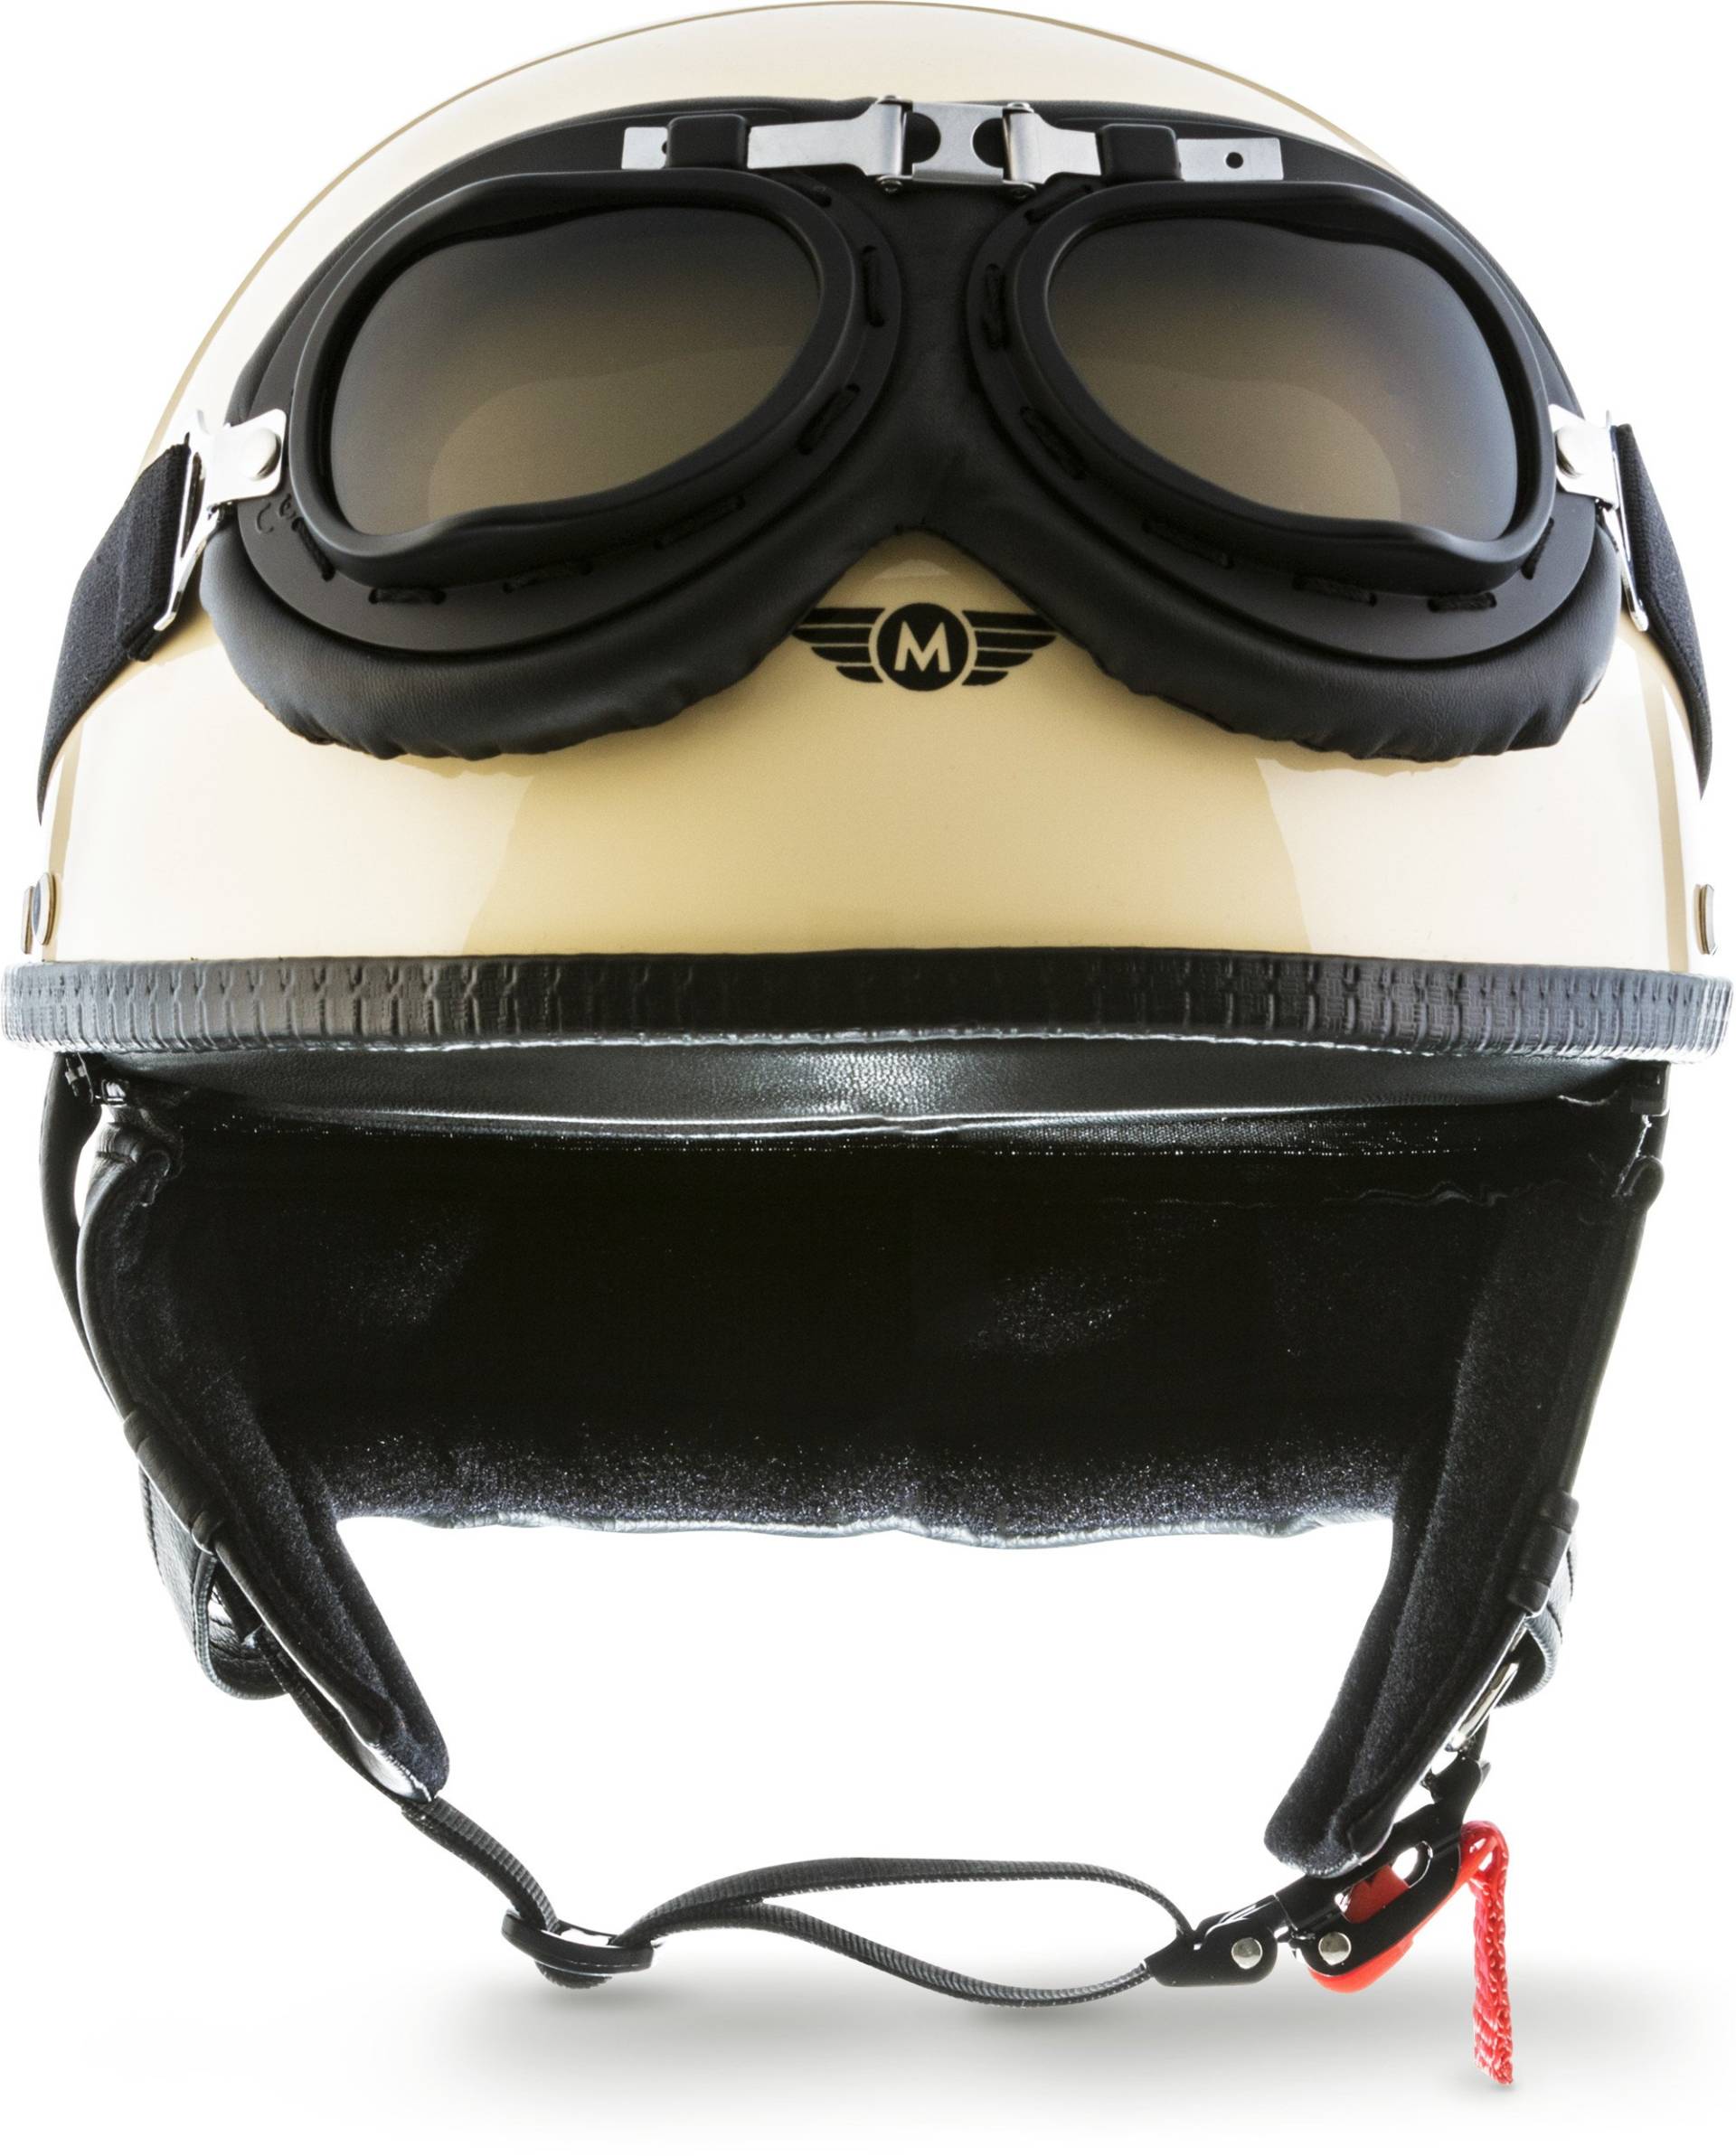 Moto Helmets® D22-Set „Creme“ · Brain-Cap · Halbschale Jet-Helm Motorrad-Helm Roller-Helm Scooter-Helm Bobber Mofa-Helm Chopper Retro Cruiser Vintage Pilot Biker Helmet Brille Visier · XL (61-62cm) von Moto Helmets